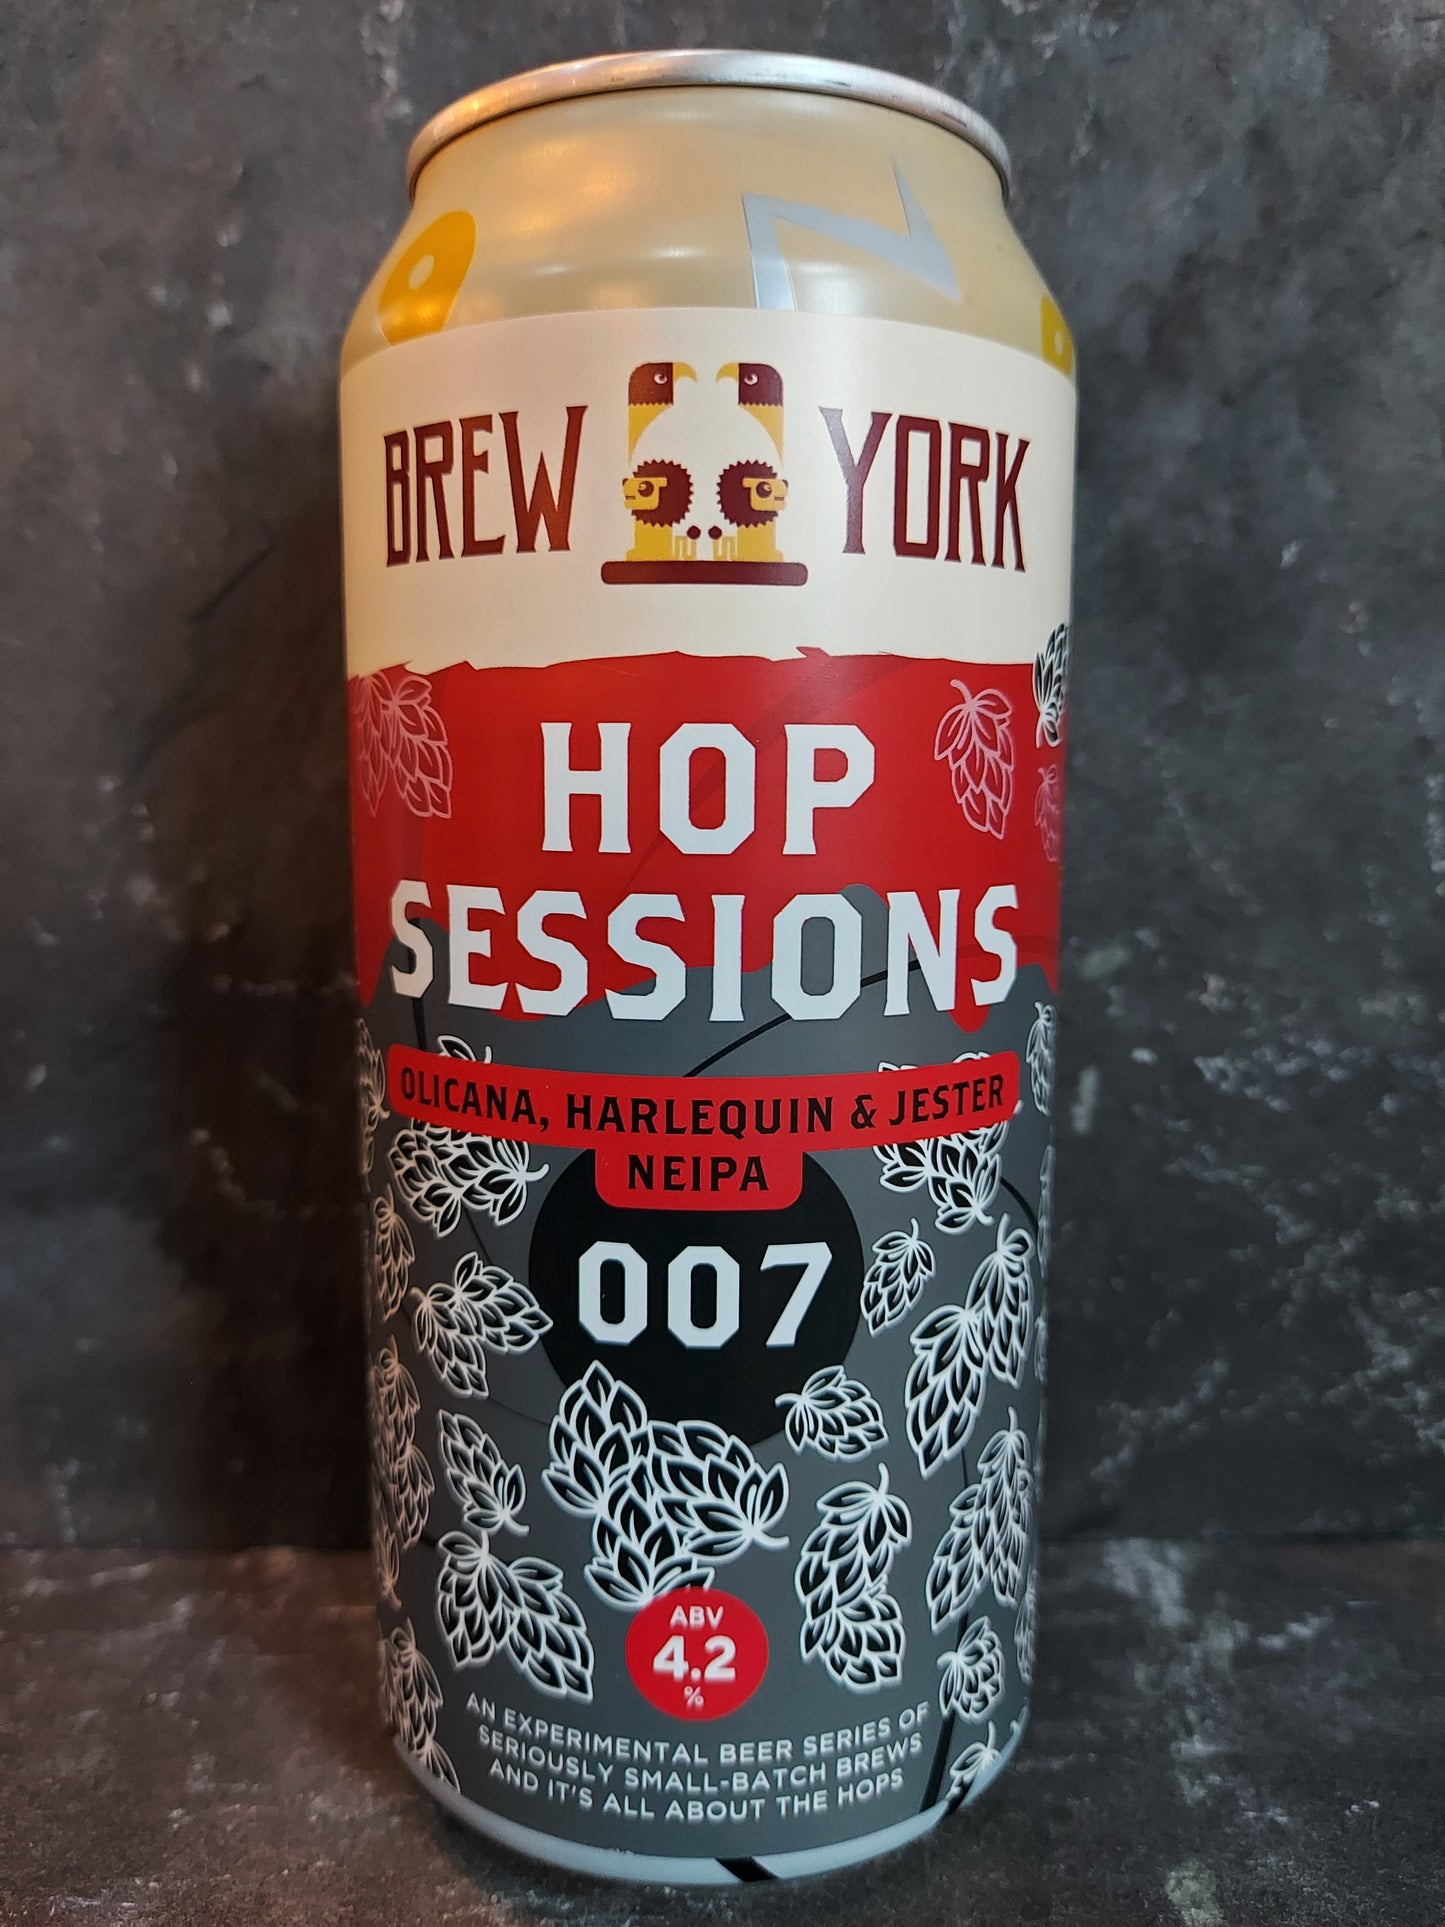 Hop Sessions 007 - Brew York